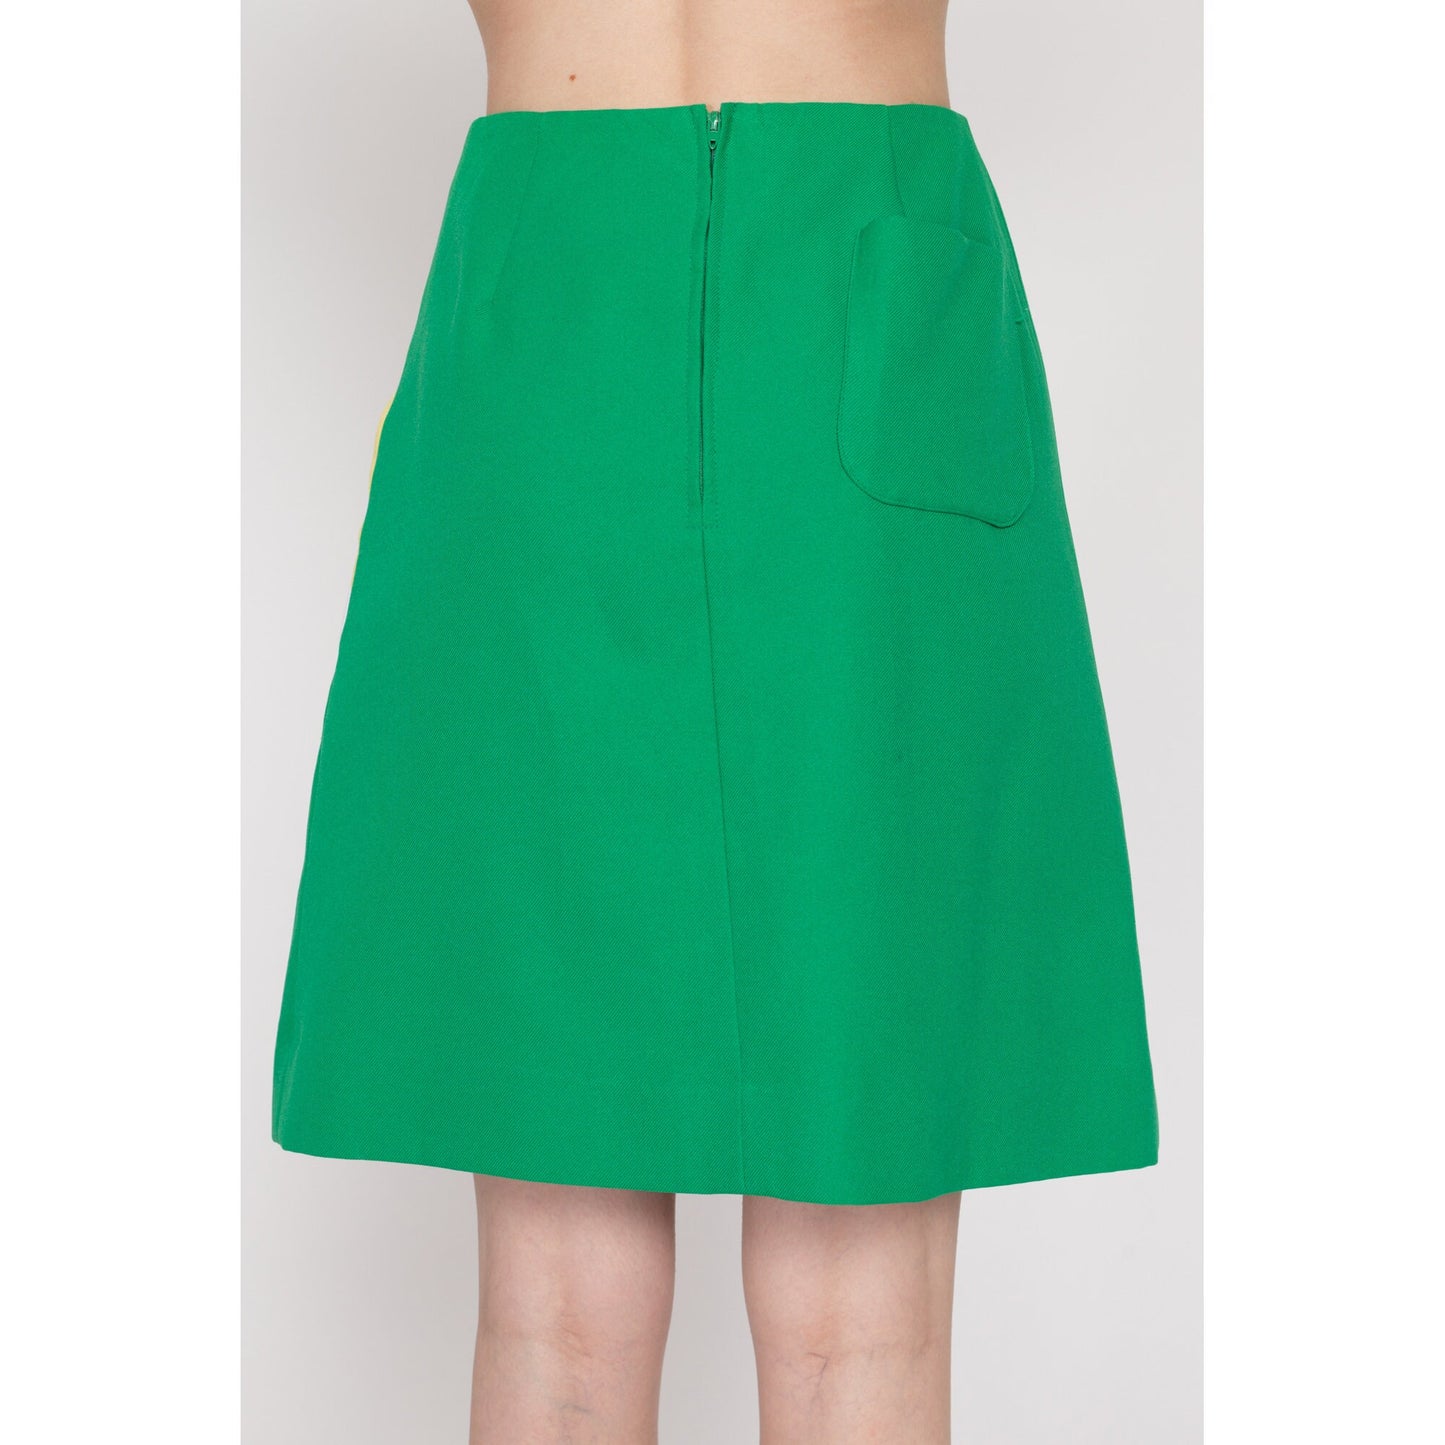 Small 70s Green Color Block Tennis Skirt 25.5" | Retro Sportswear High Waisted A Line Athletic Mini Skort